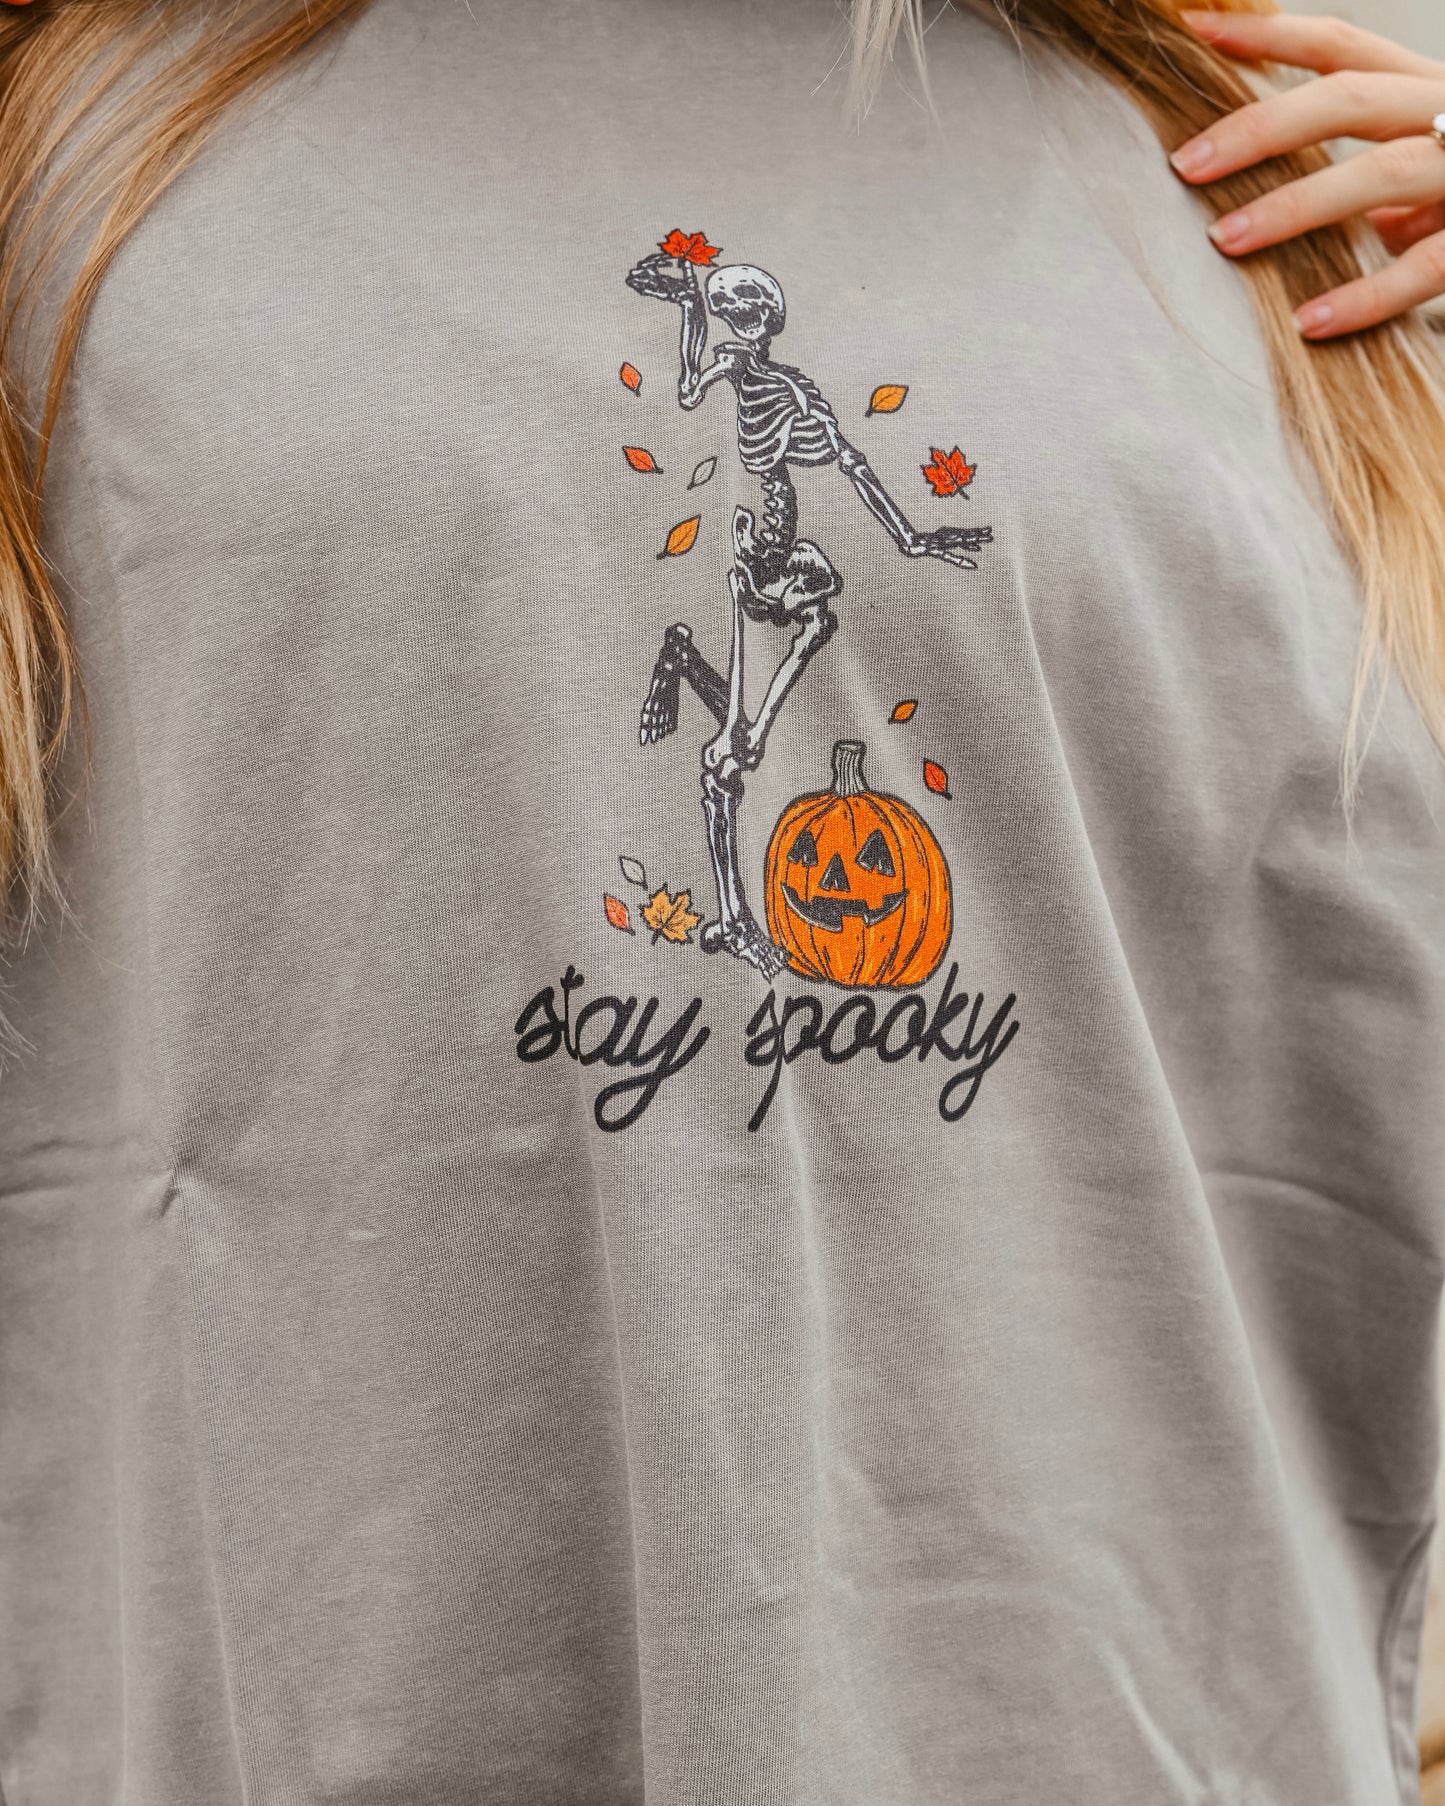 Stay Spooky Oversized Tee Shirt // SHARE STUDIO BRAND